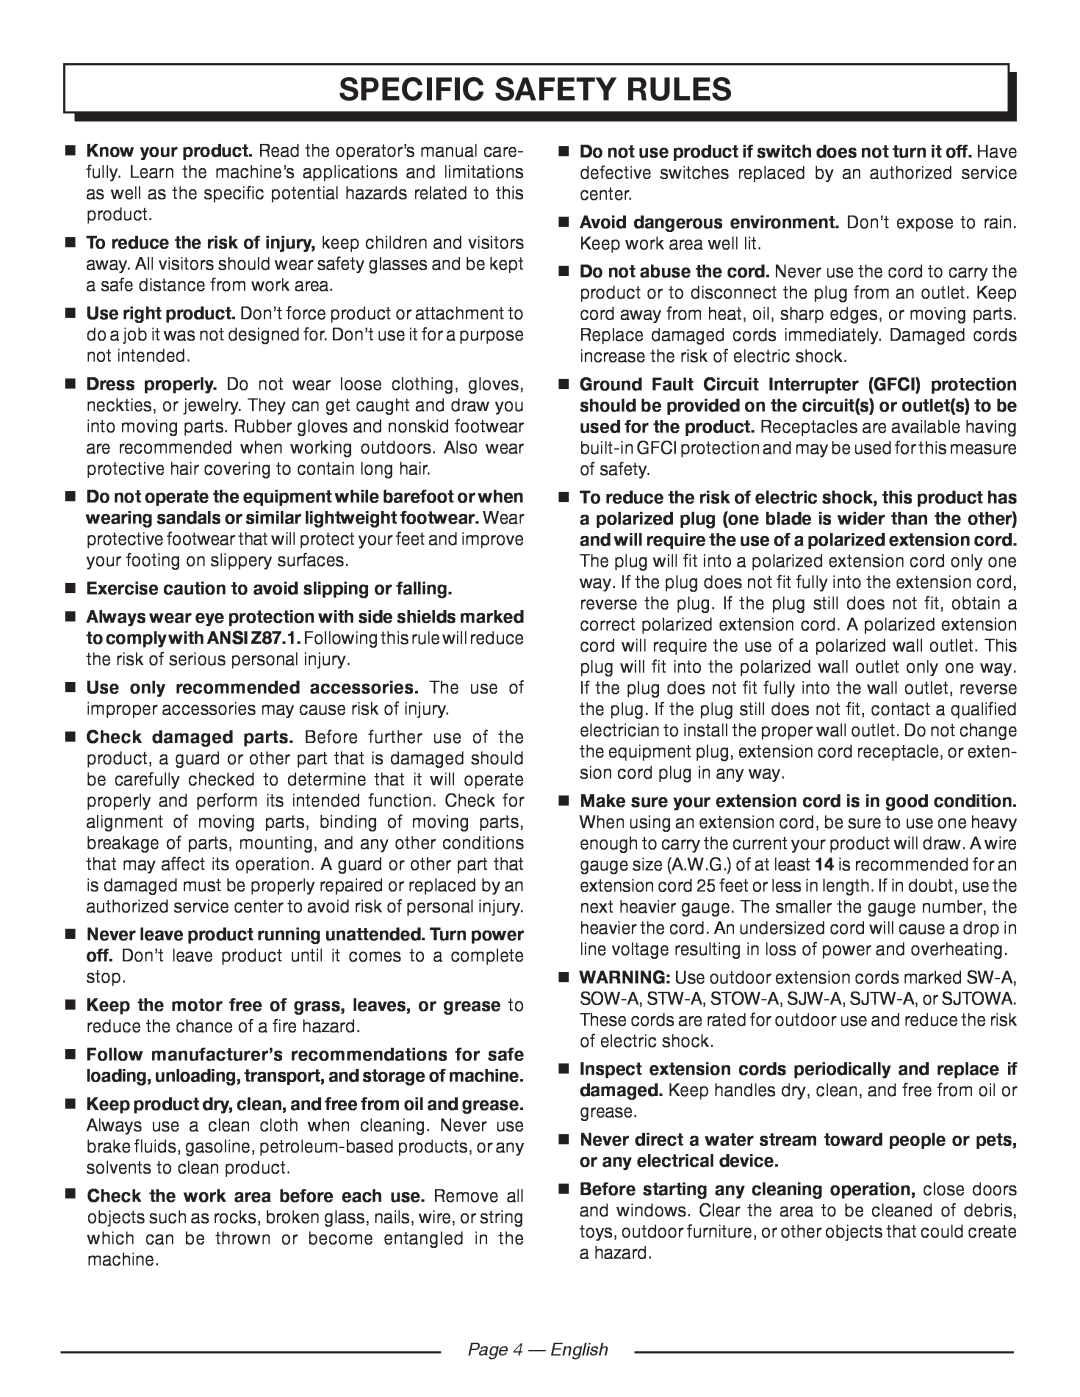 Homelite UT80720 manuel dutilisation Specific Safety Rules, Page 4 - English 